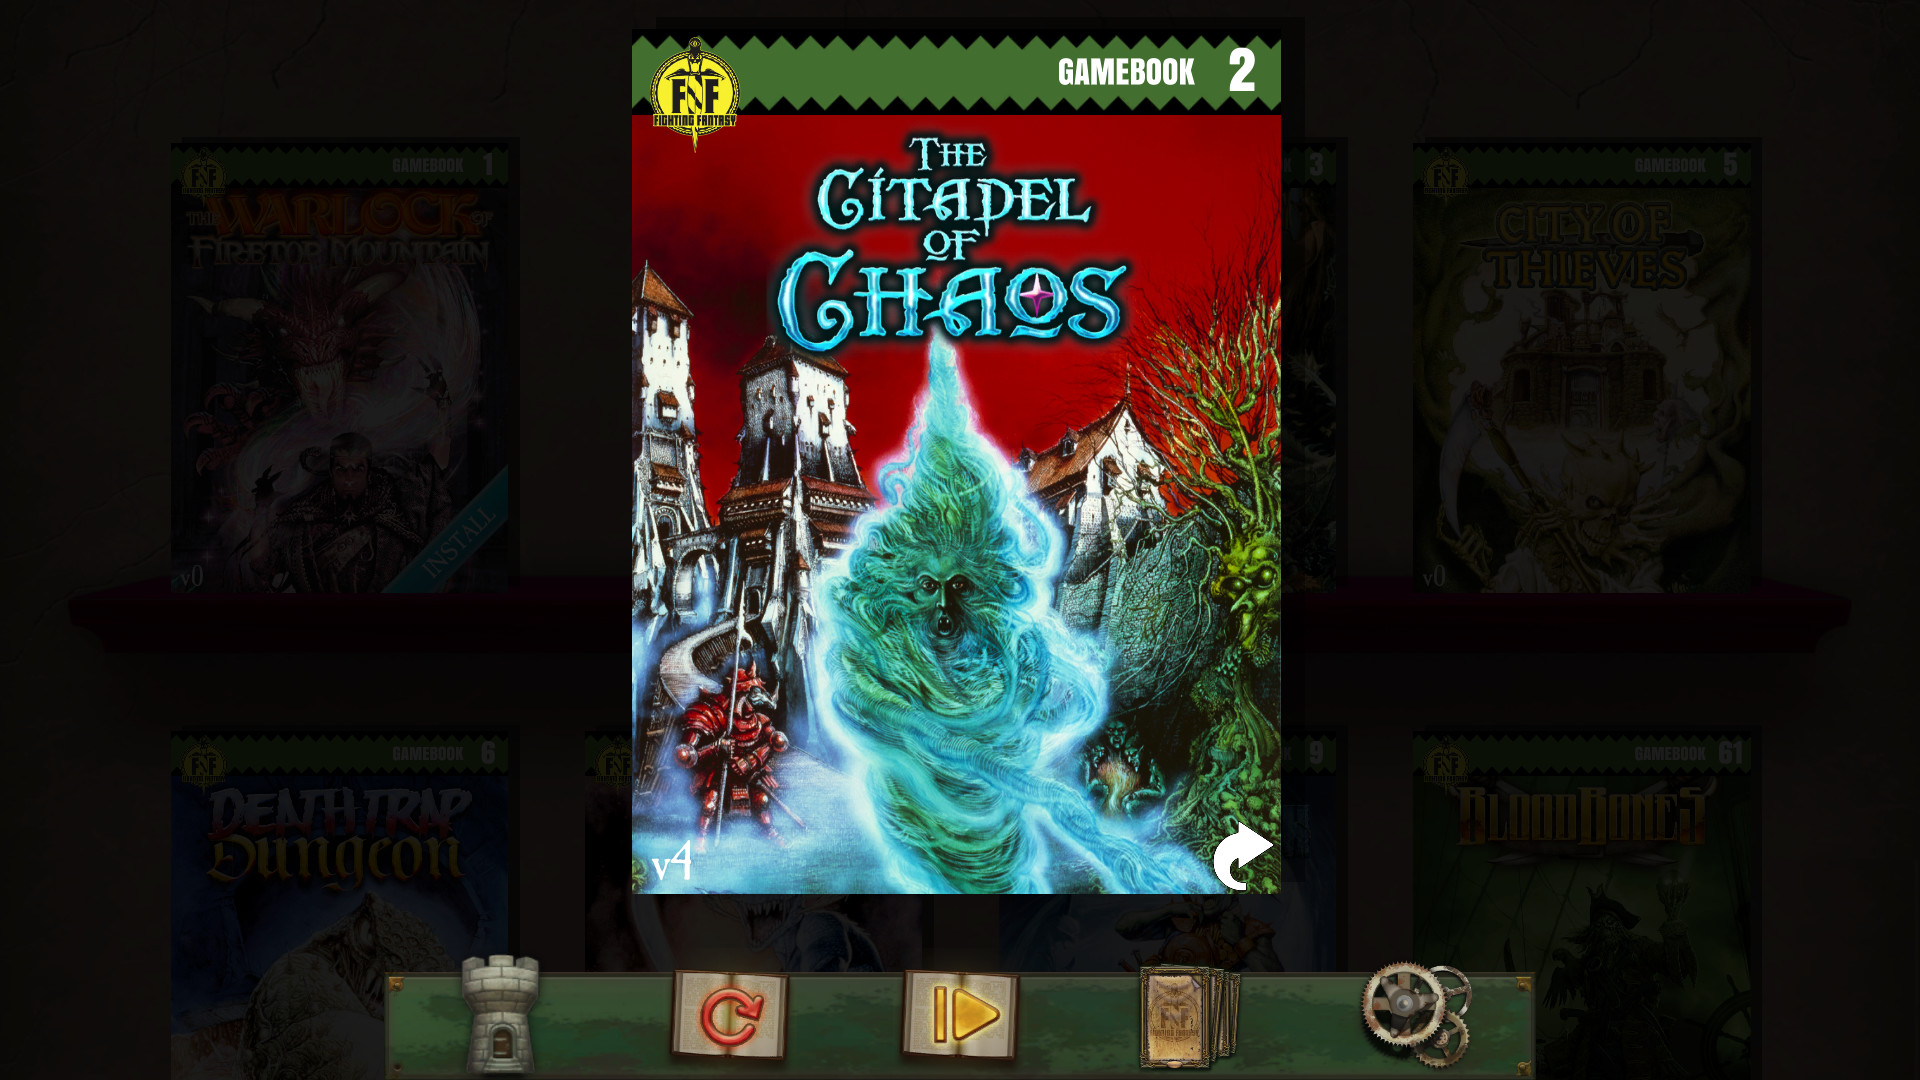 Citadel of Chaos (Fighting Fantasy Classics) | WW (9dfeb548-c301-4094-b483-f603cb04d489)